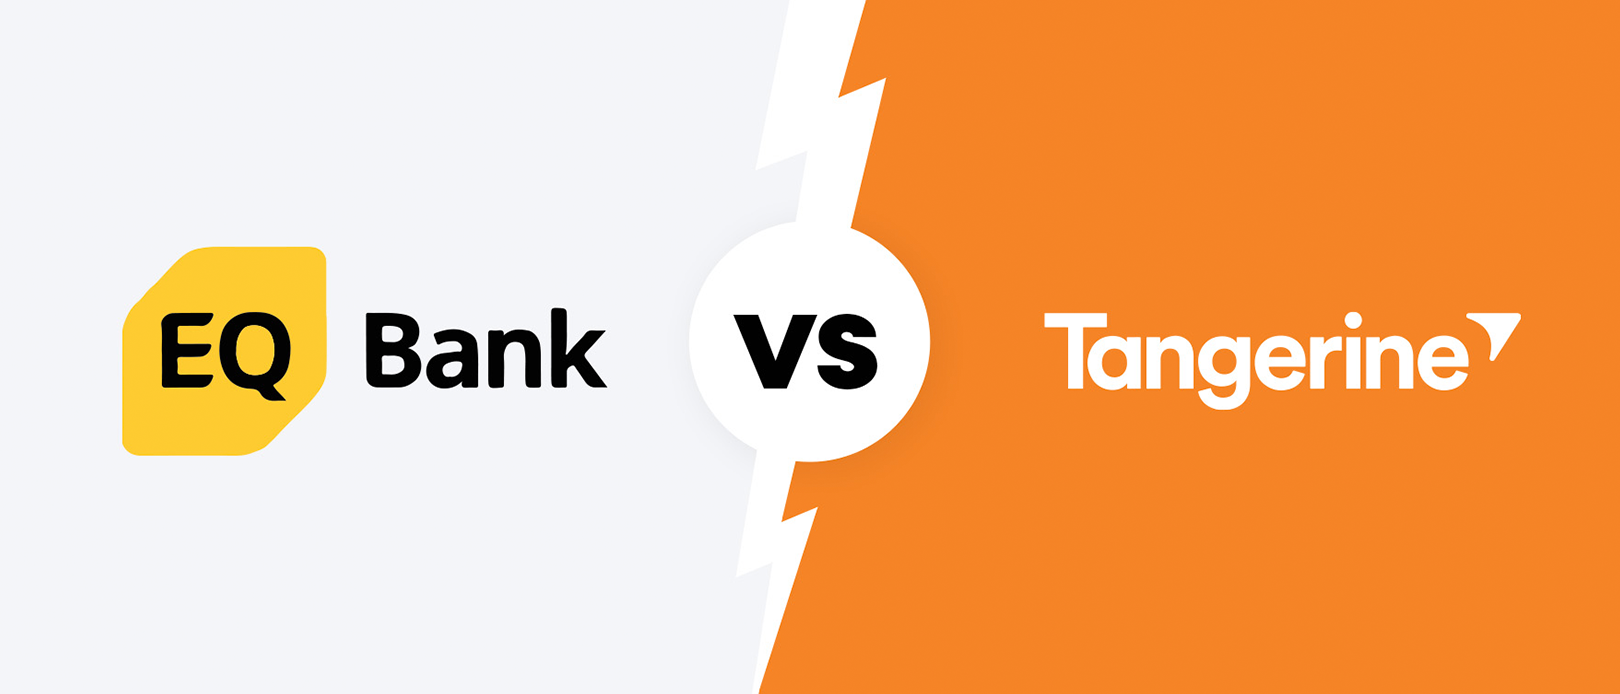 EQ Bank vs. Tangerine: Which bank is best?